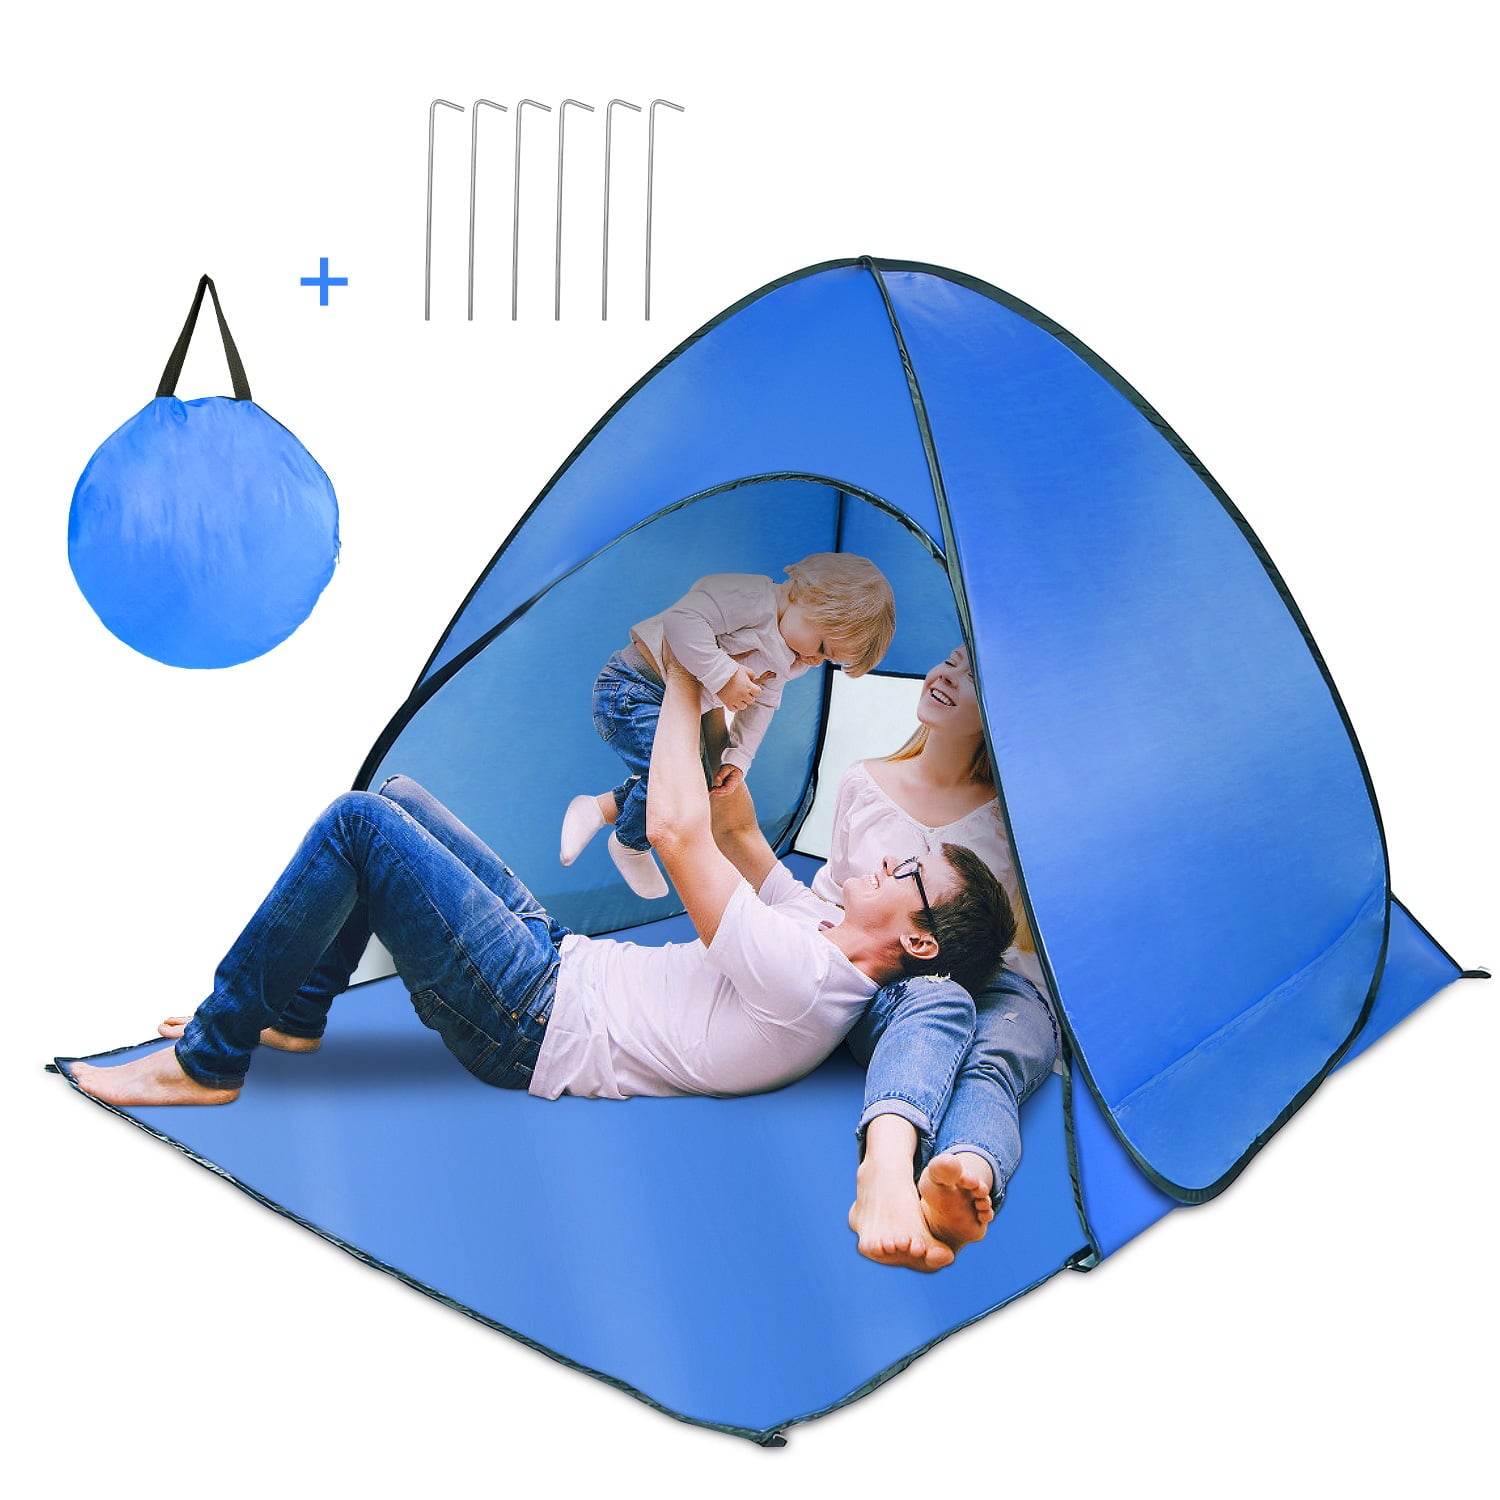 iMountek Pop Up Beach Tent Outdoor Camping Fishing Sun Shade Shelter Anti-UV Automatic Waterproof Tent Canopy 2/3 Man Camping Tent， Blue